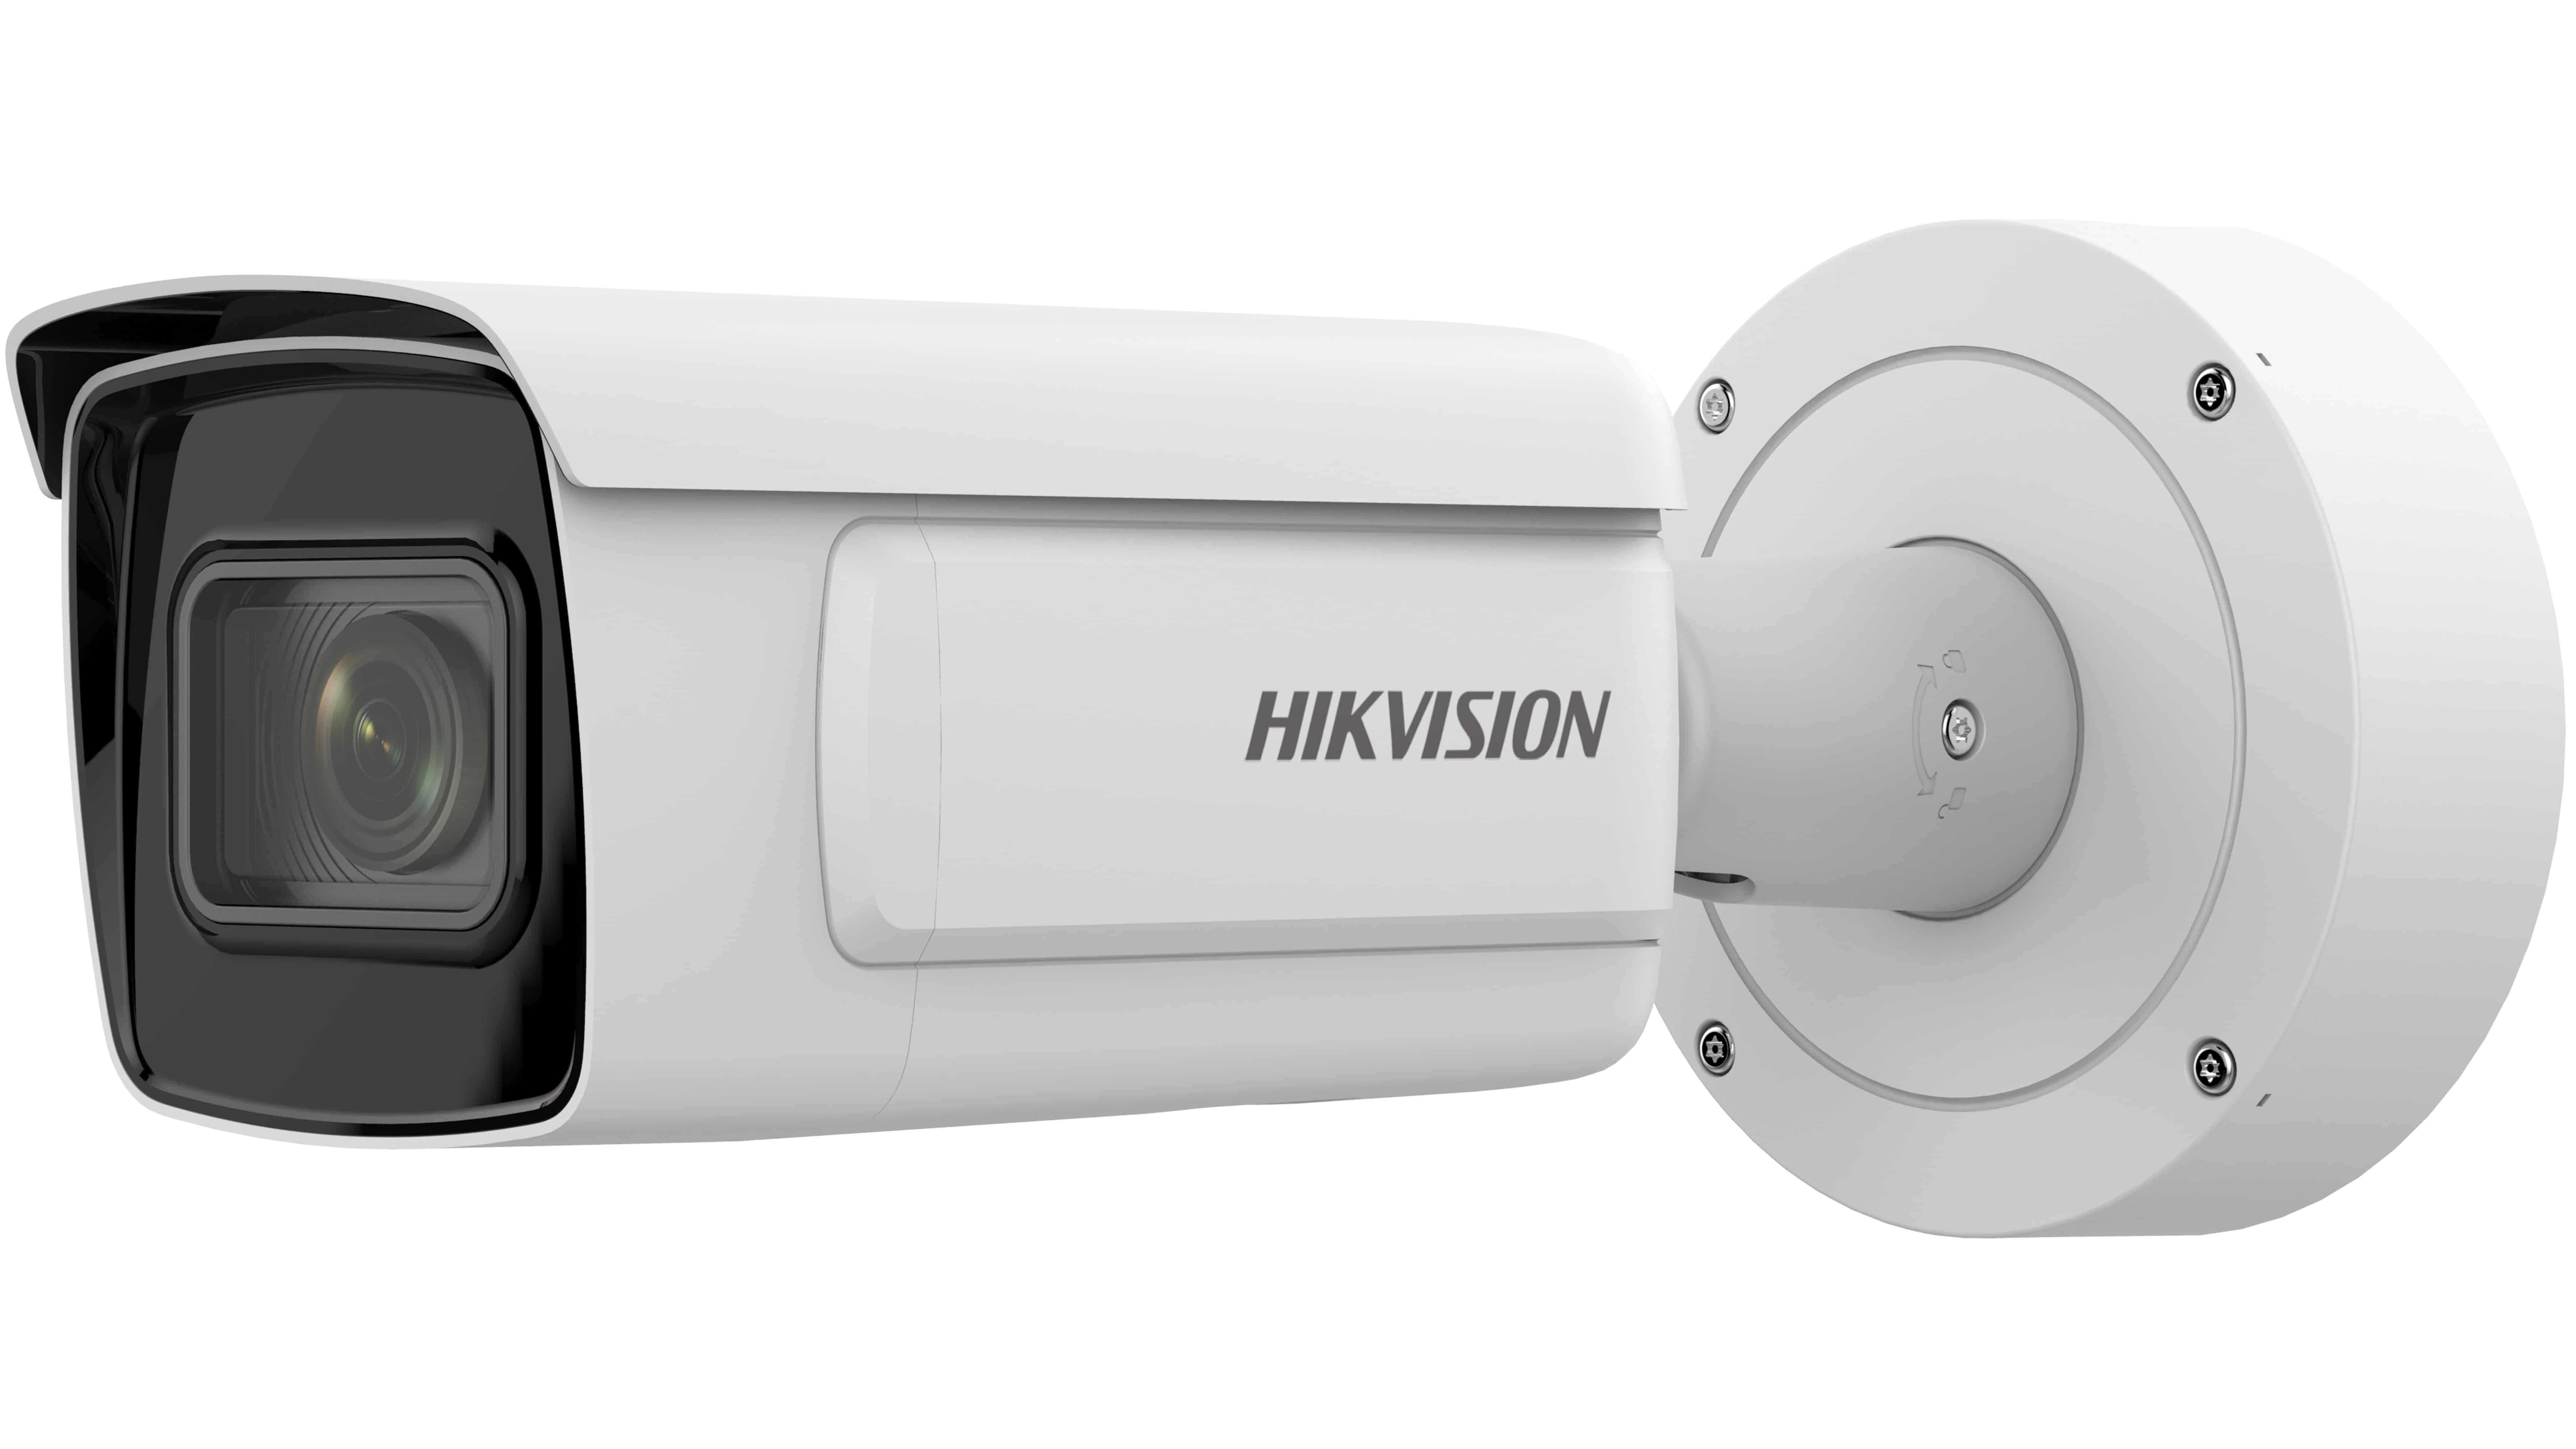 Prama Hikvision introduces new 